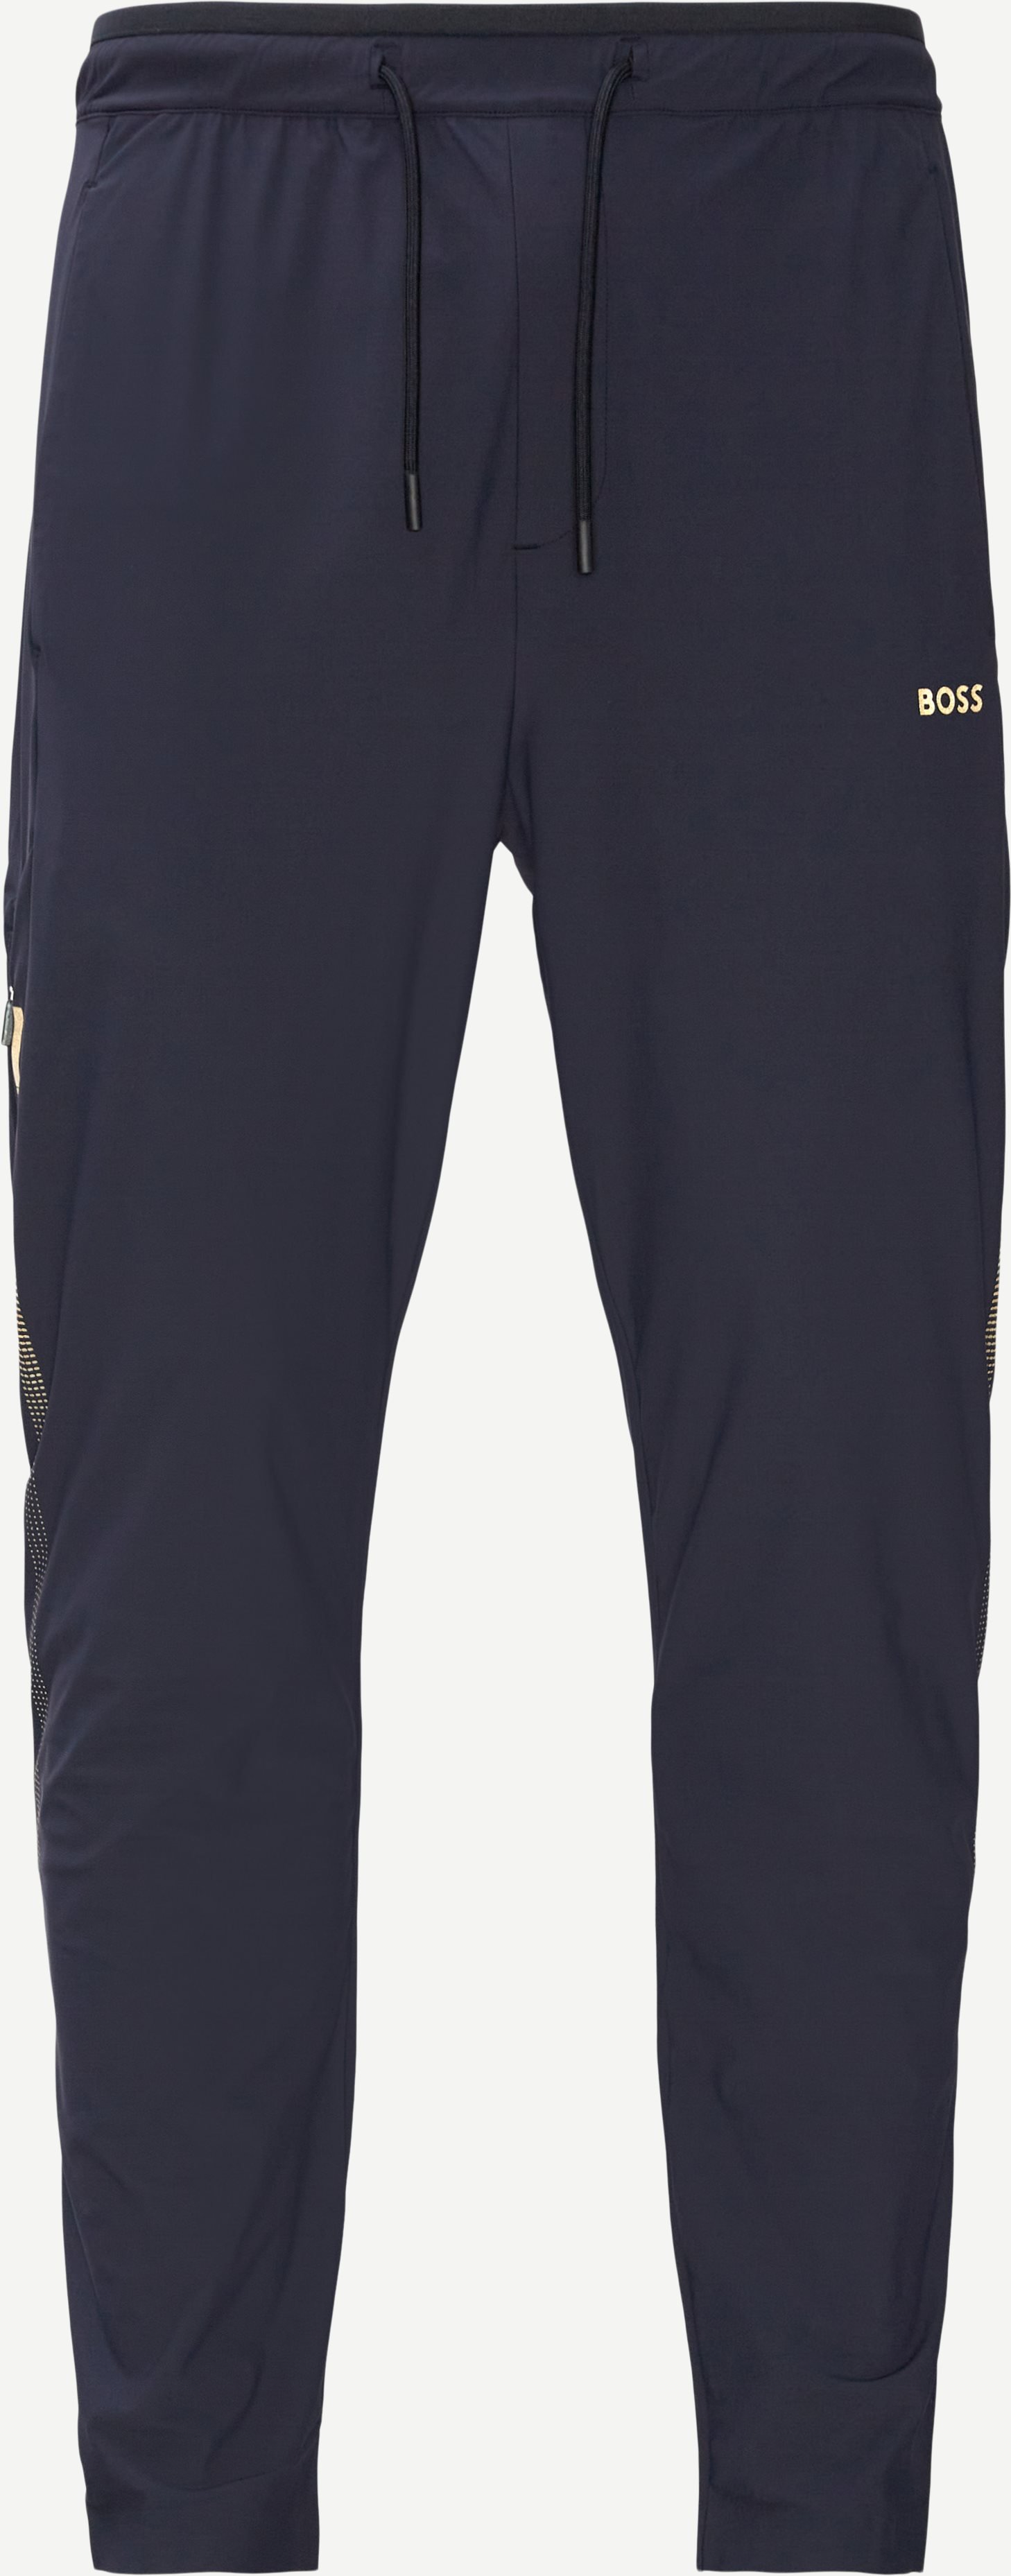 Hwoven Sweatpants - Bukser - Regular fit - Blå